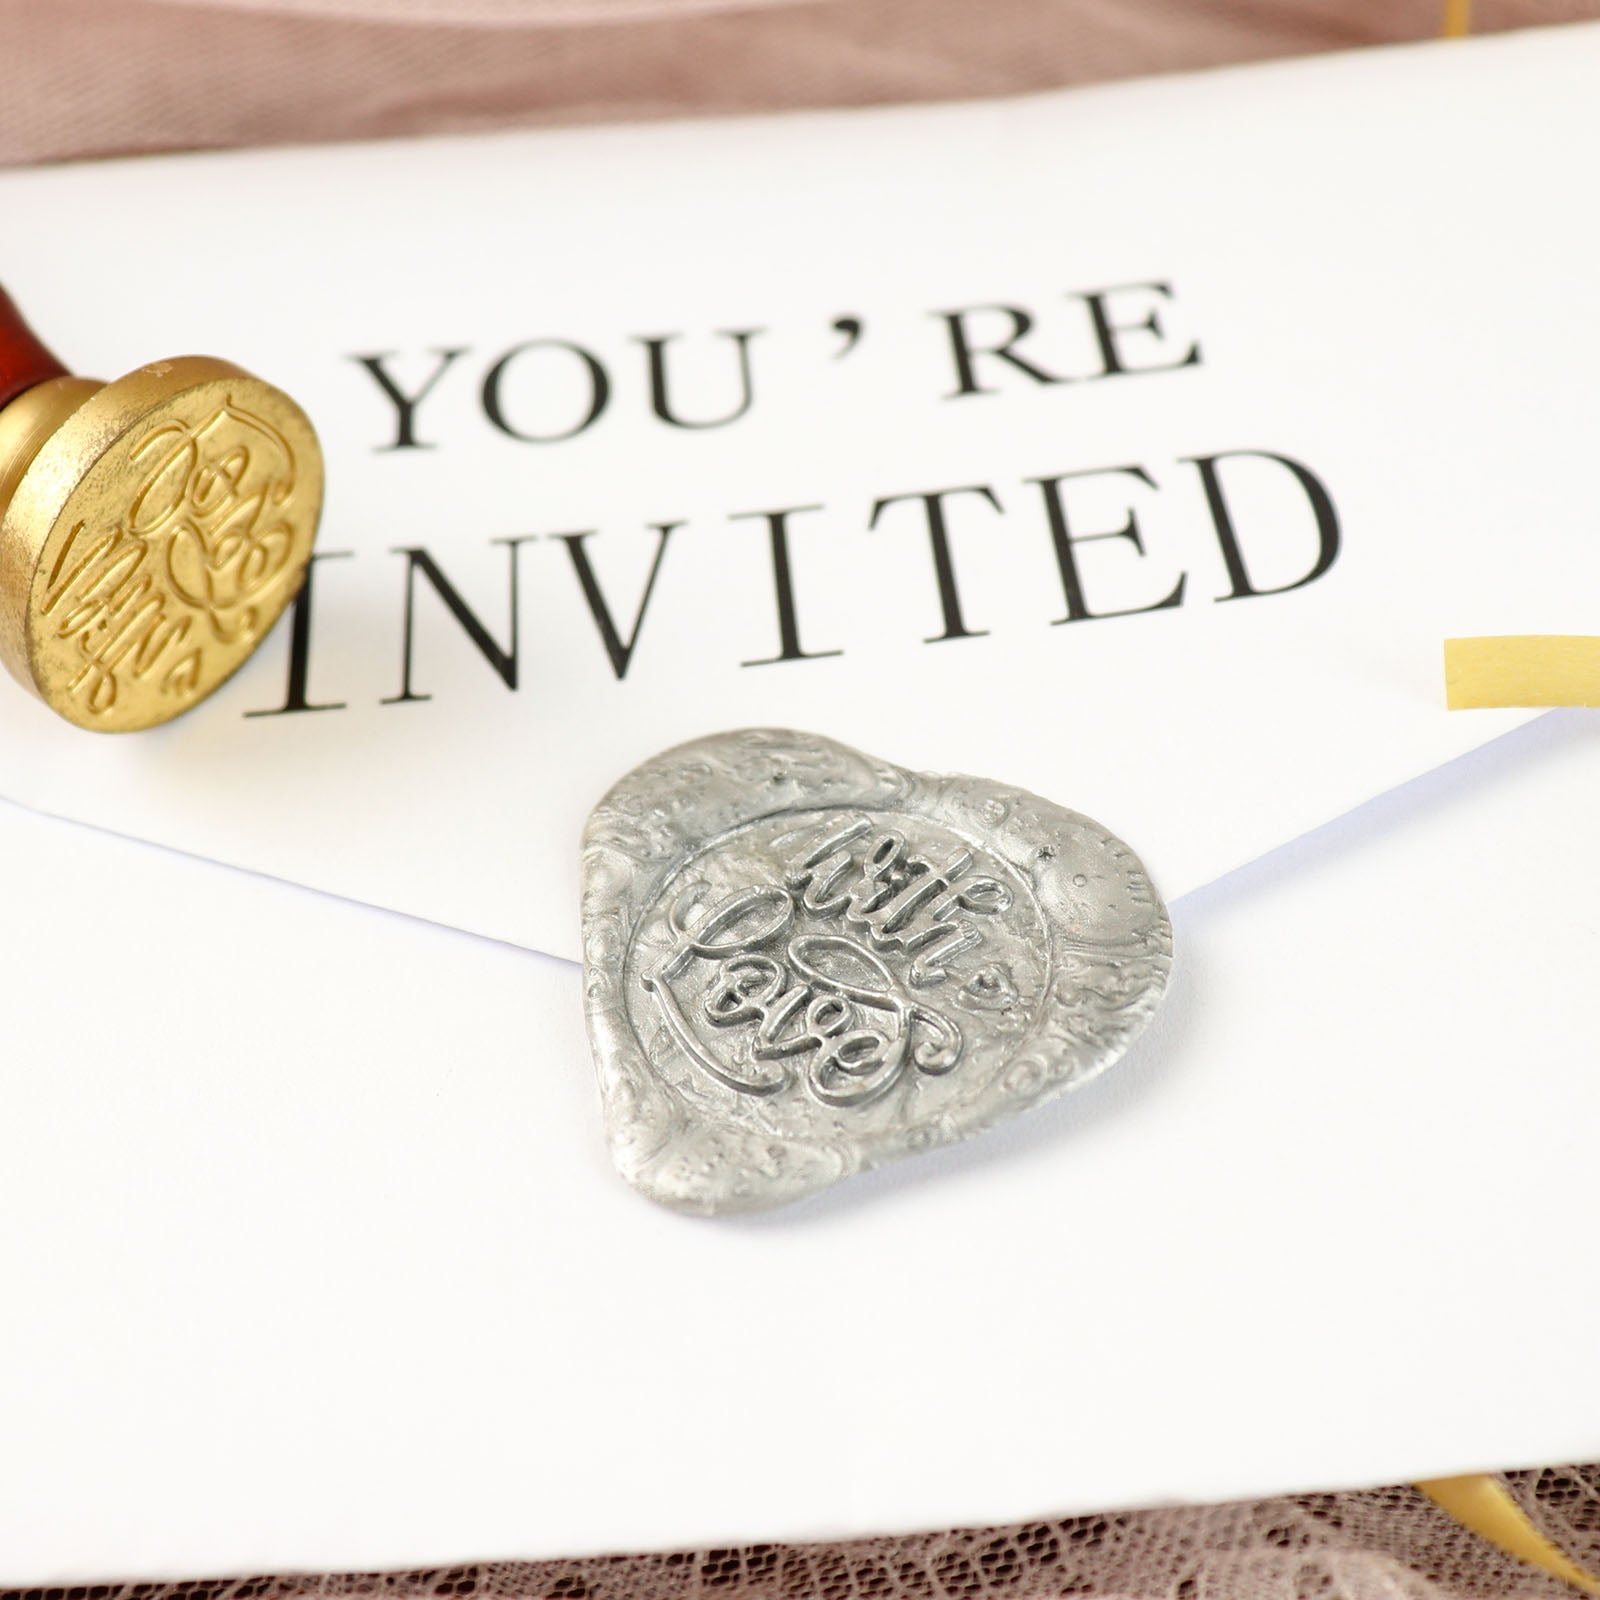 HEART TIARA Wax Seal Stamp / Wedding Invite / Birthday Party Invitation /  Envelope Letter Seal / Starter Kit / Gift Box Set ref : P 